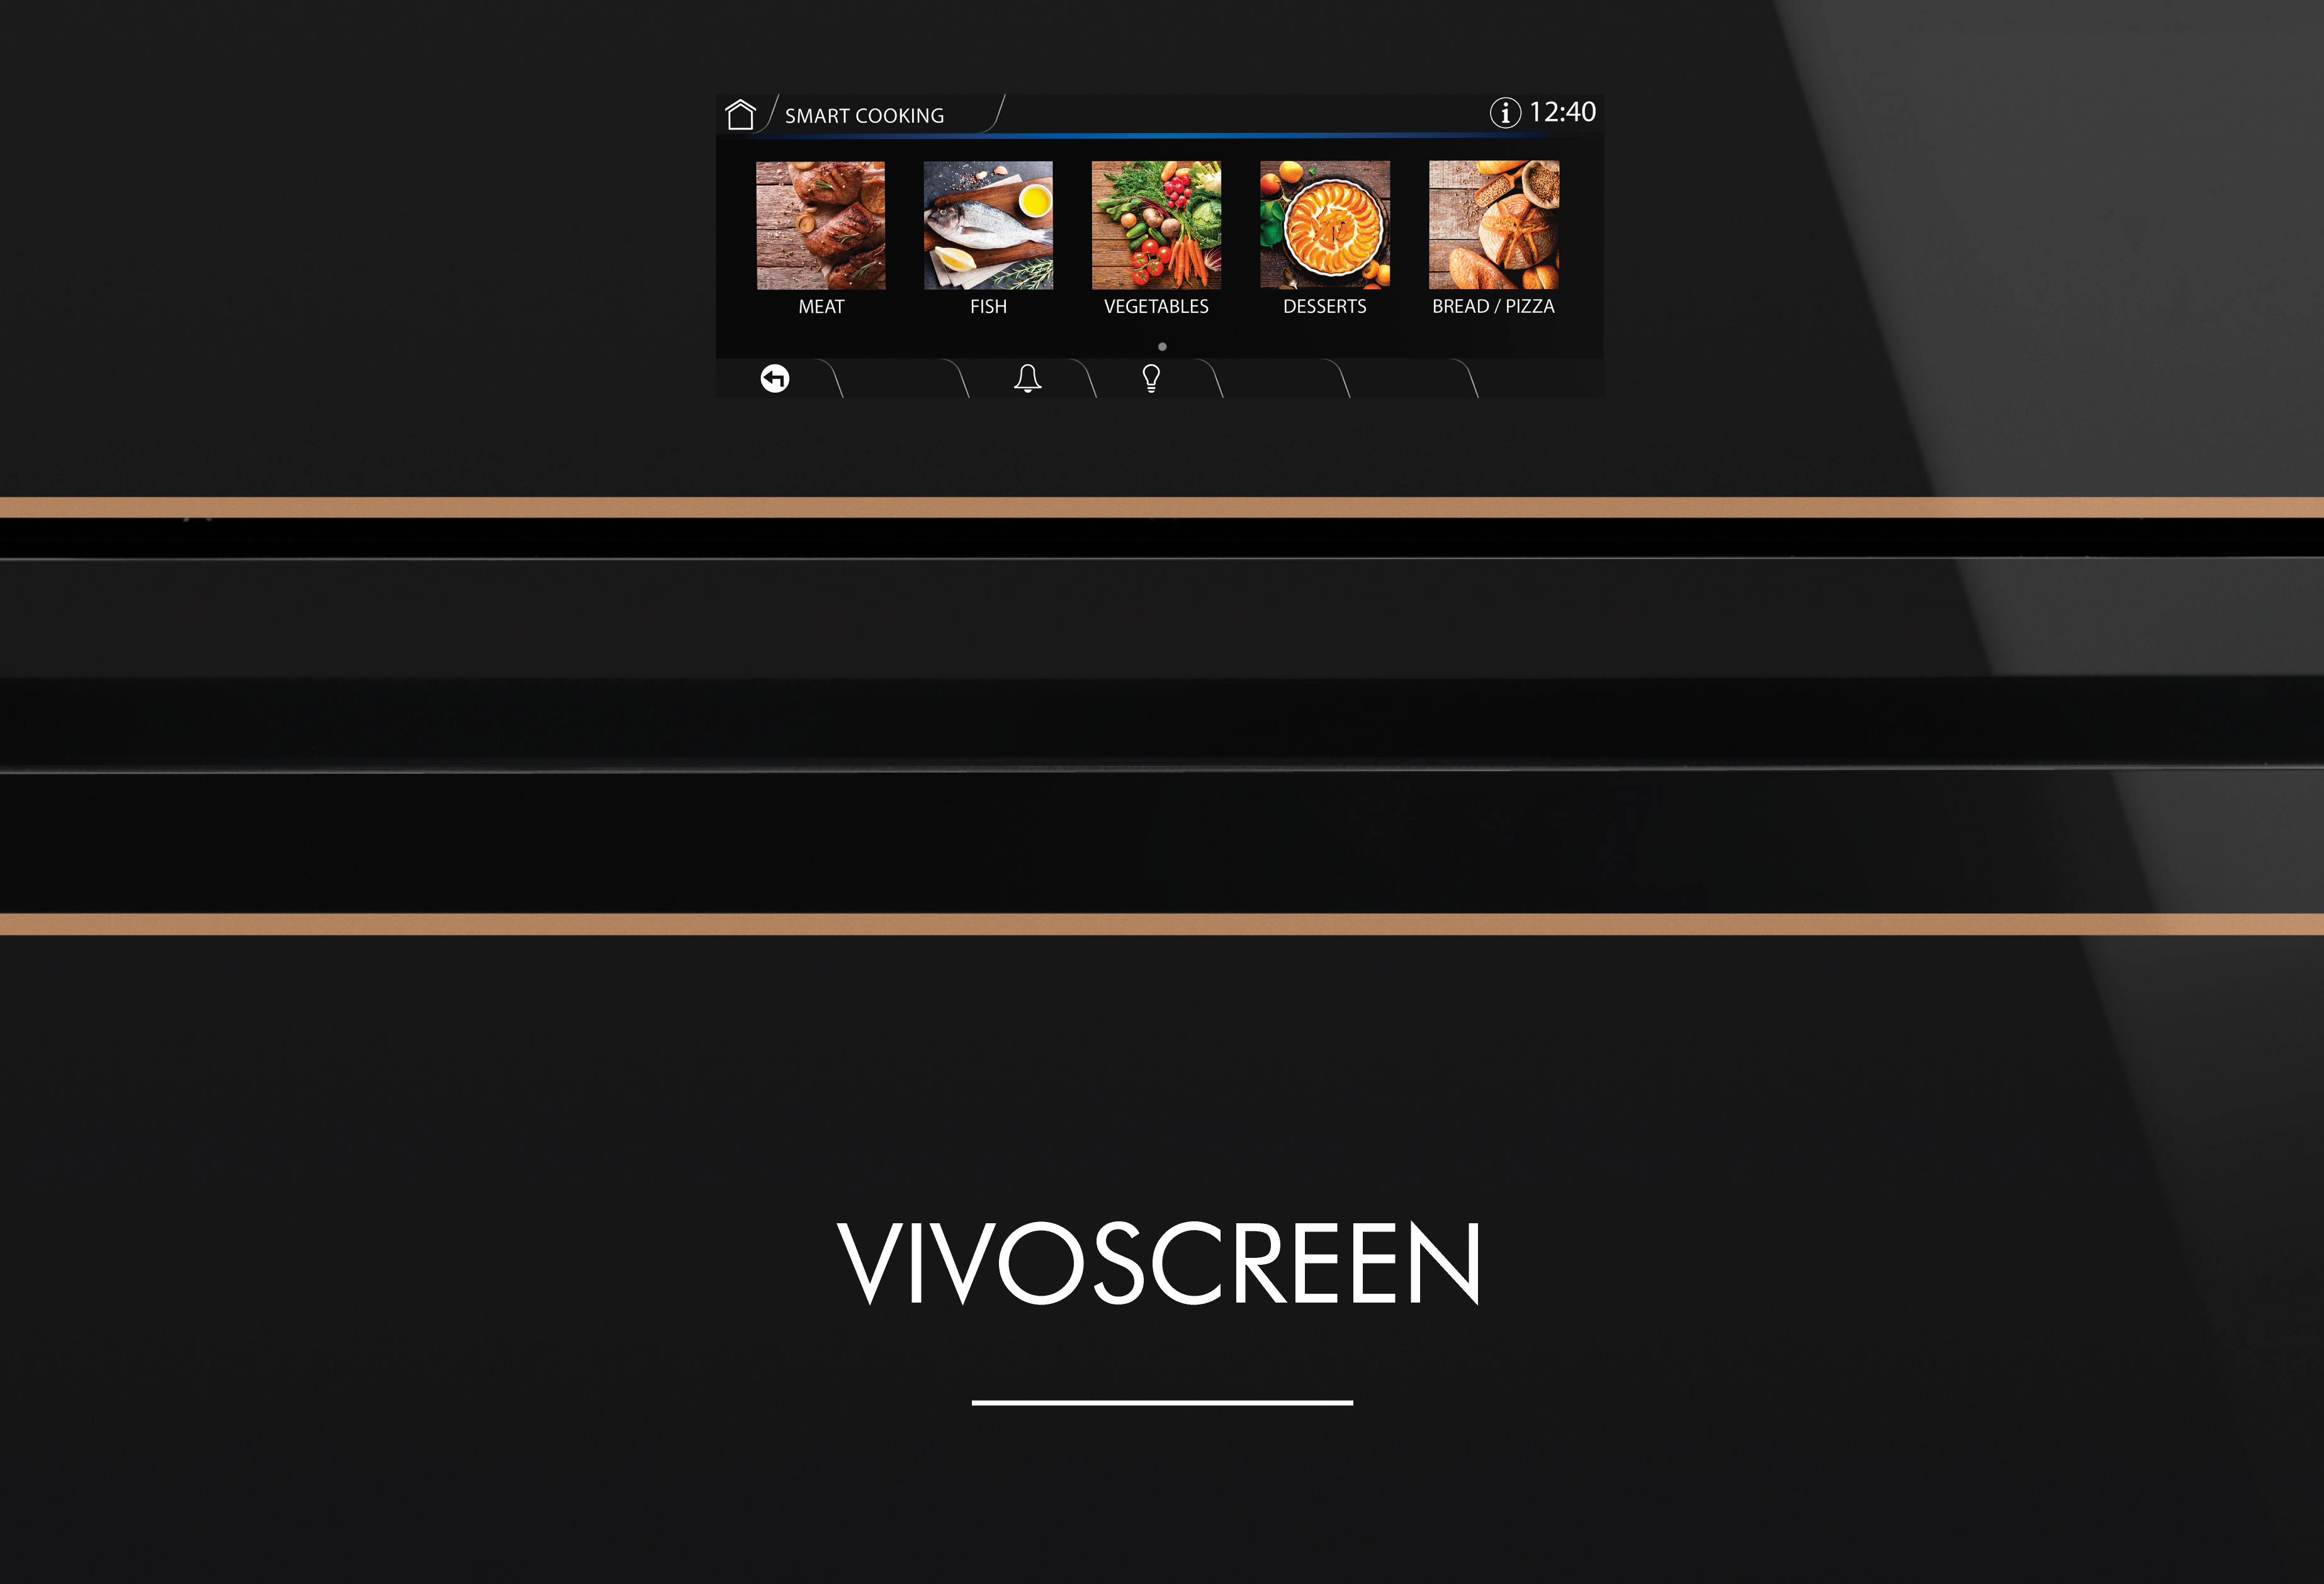 VIVOscreen oven displays